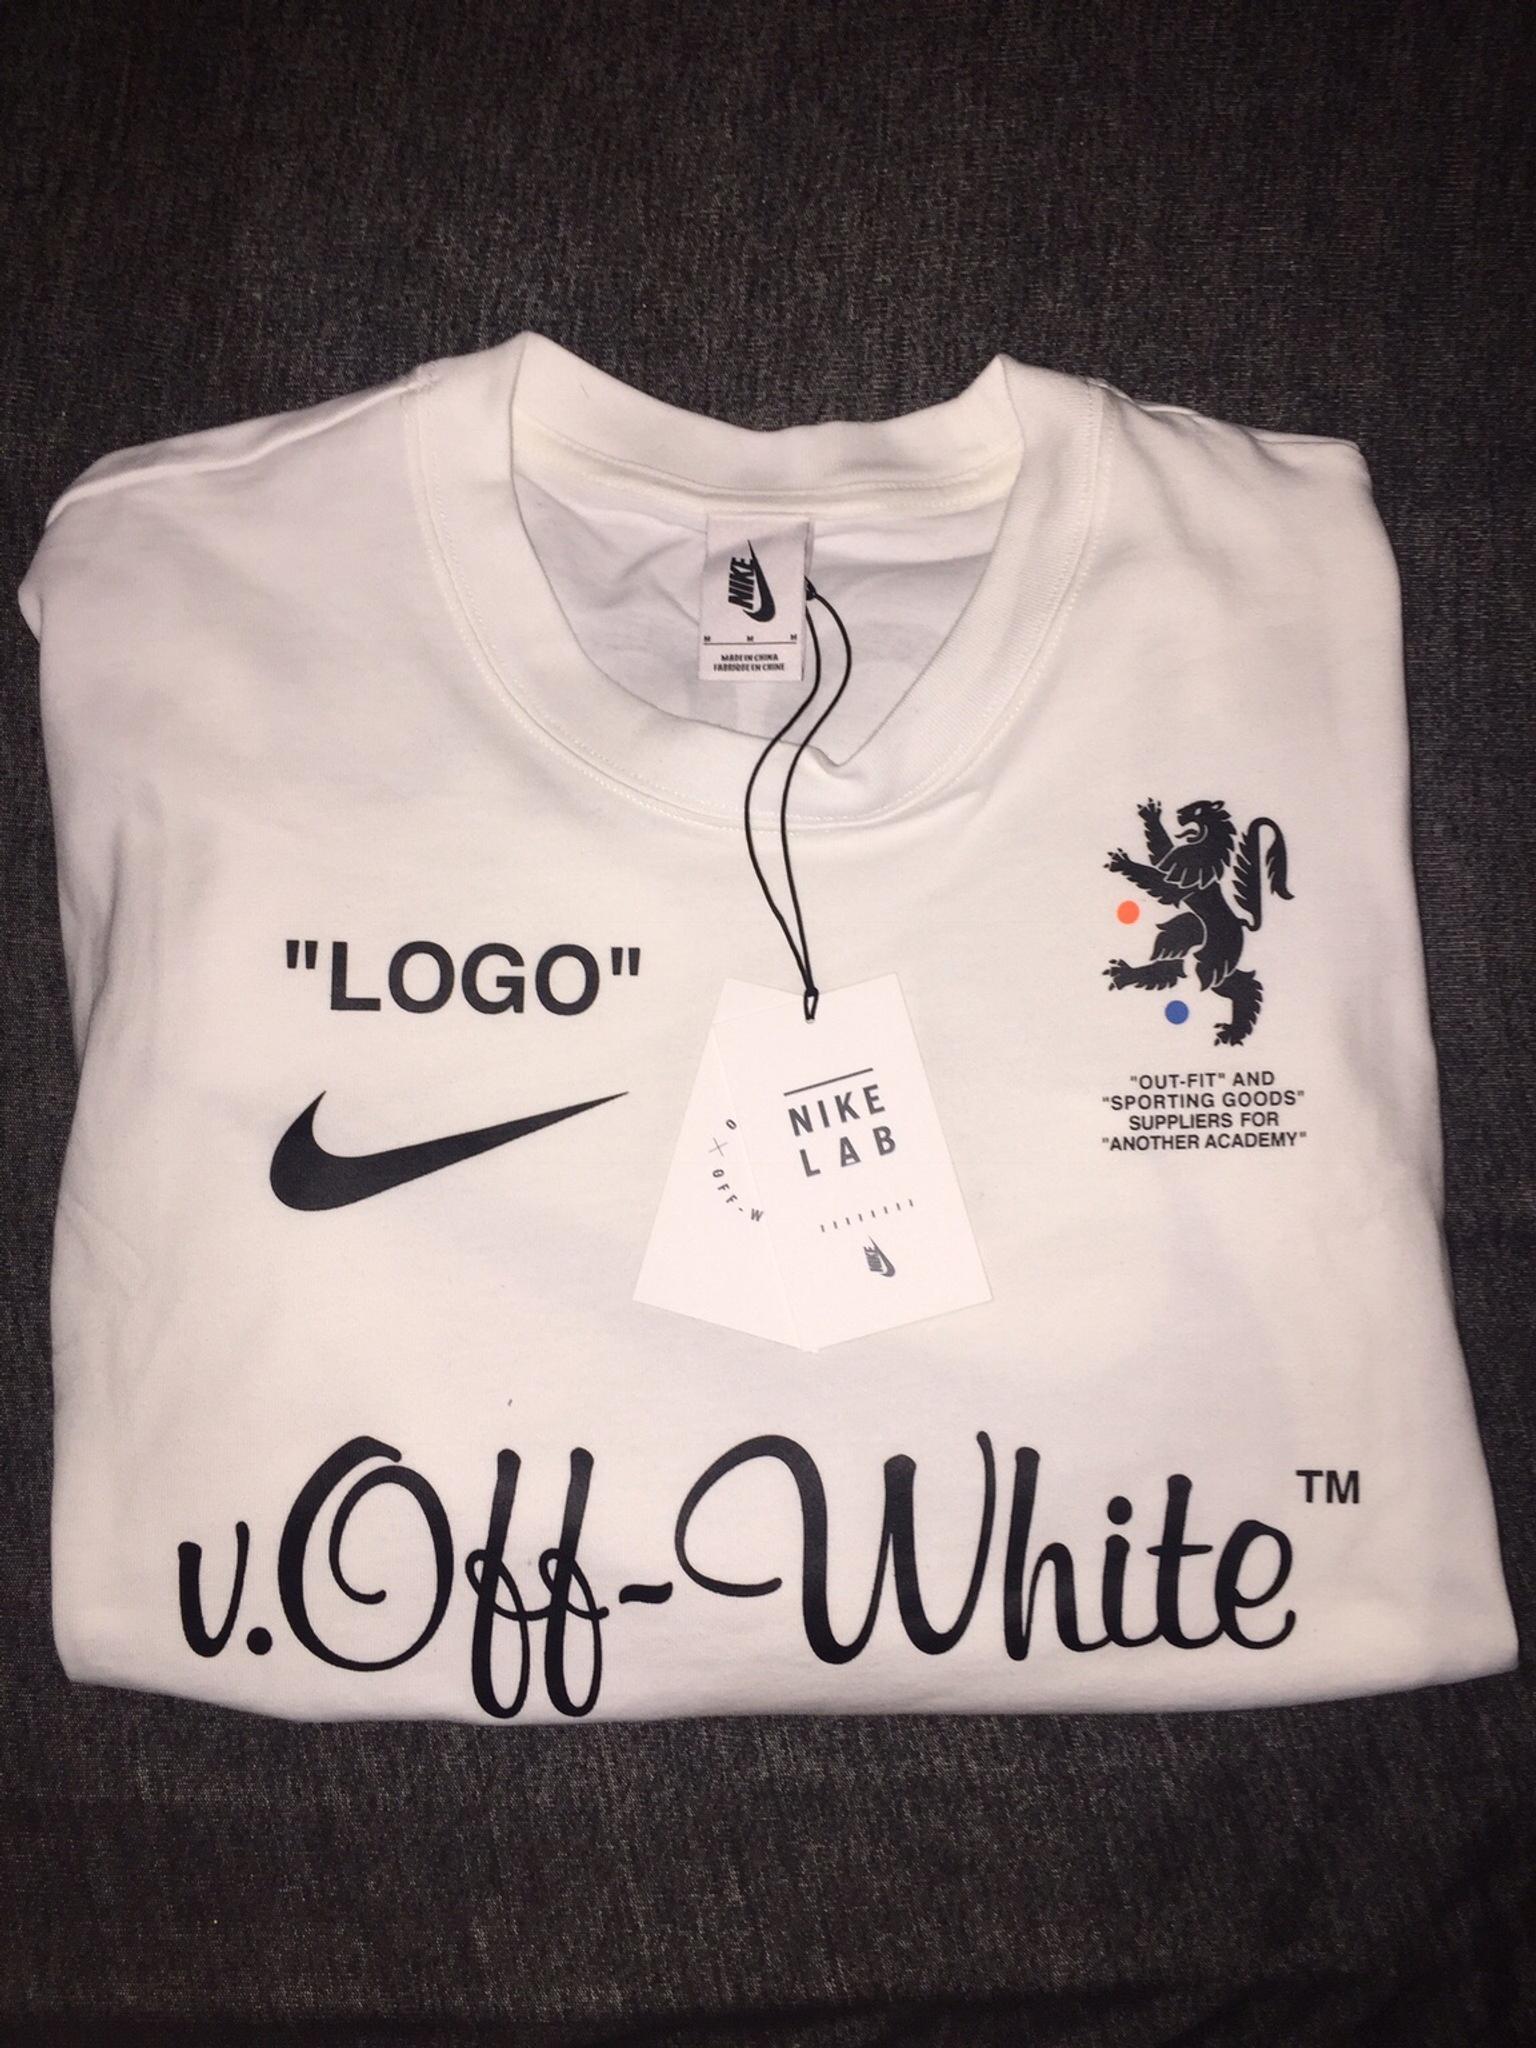 off white t shirt nike logo